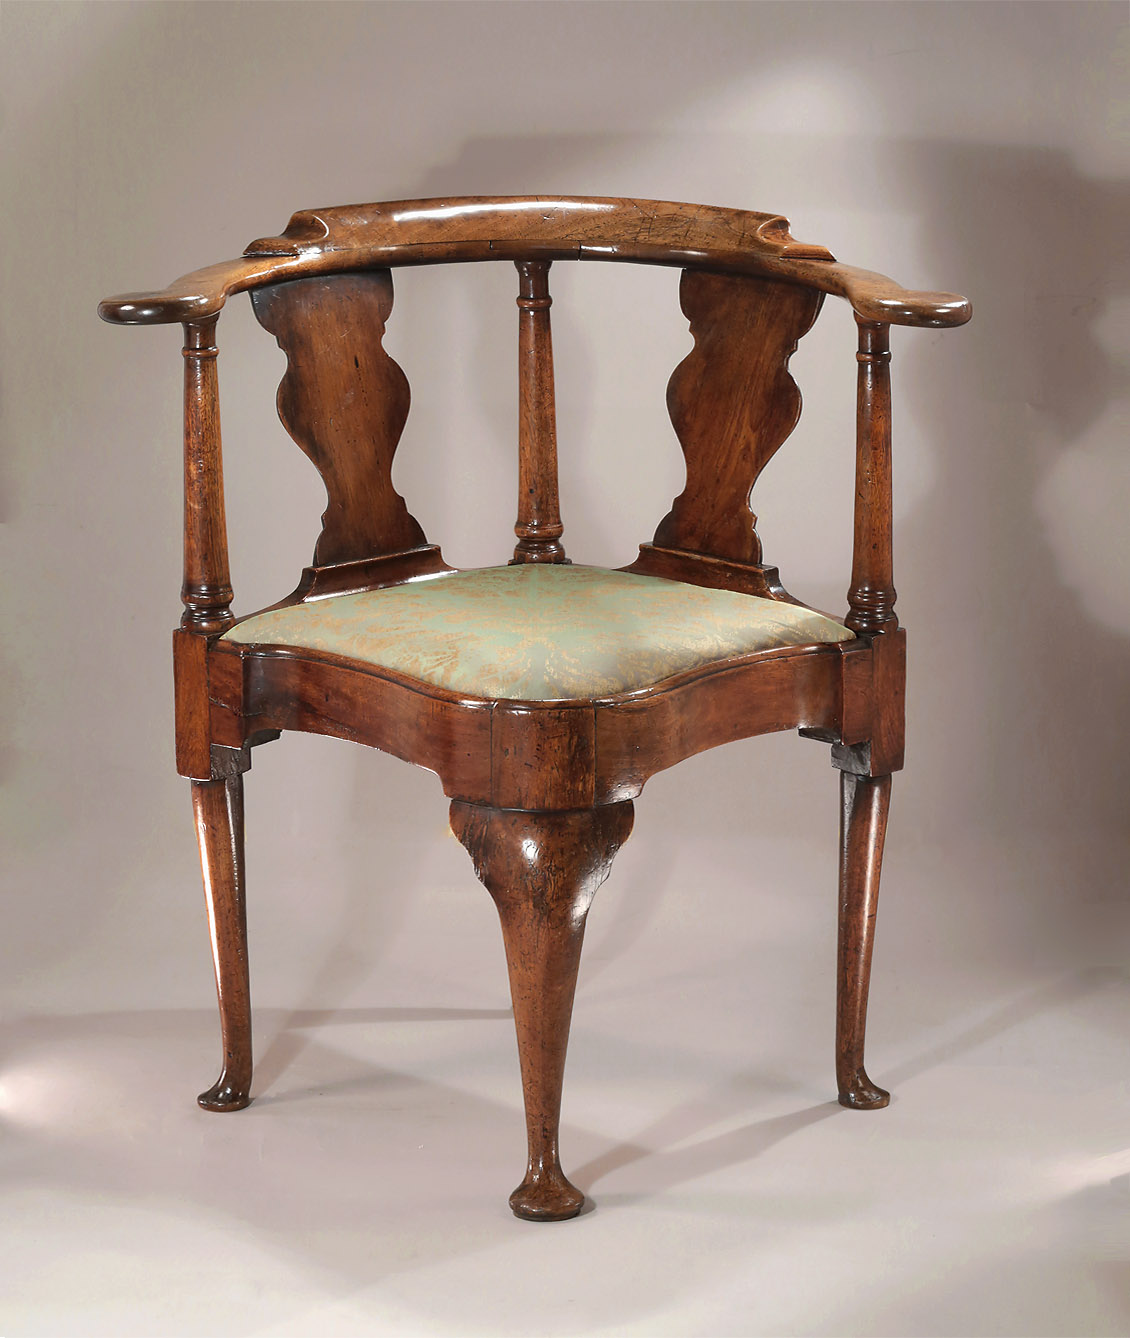 Queen Anne / George I Walnut Corner (Writing) Chair with Serpentine Seat, England, c1710-20